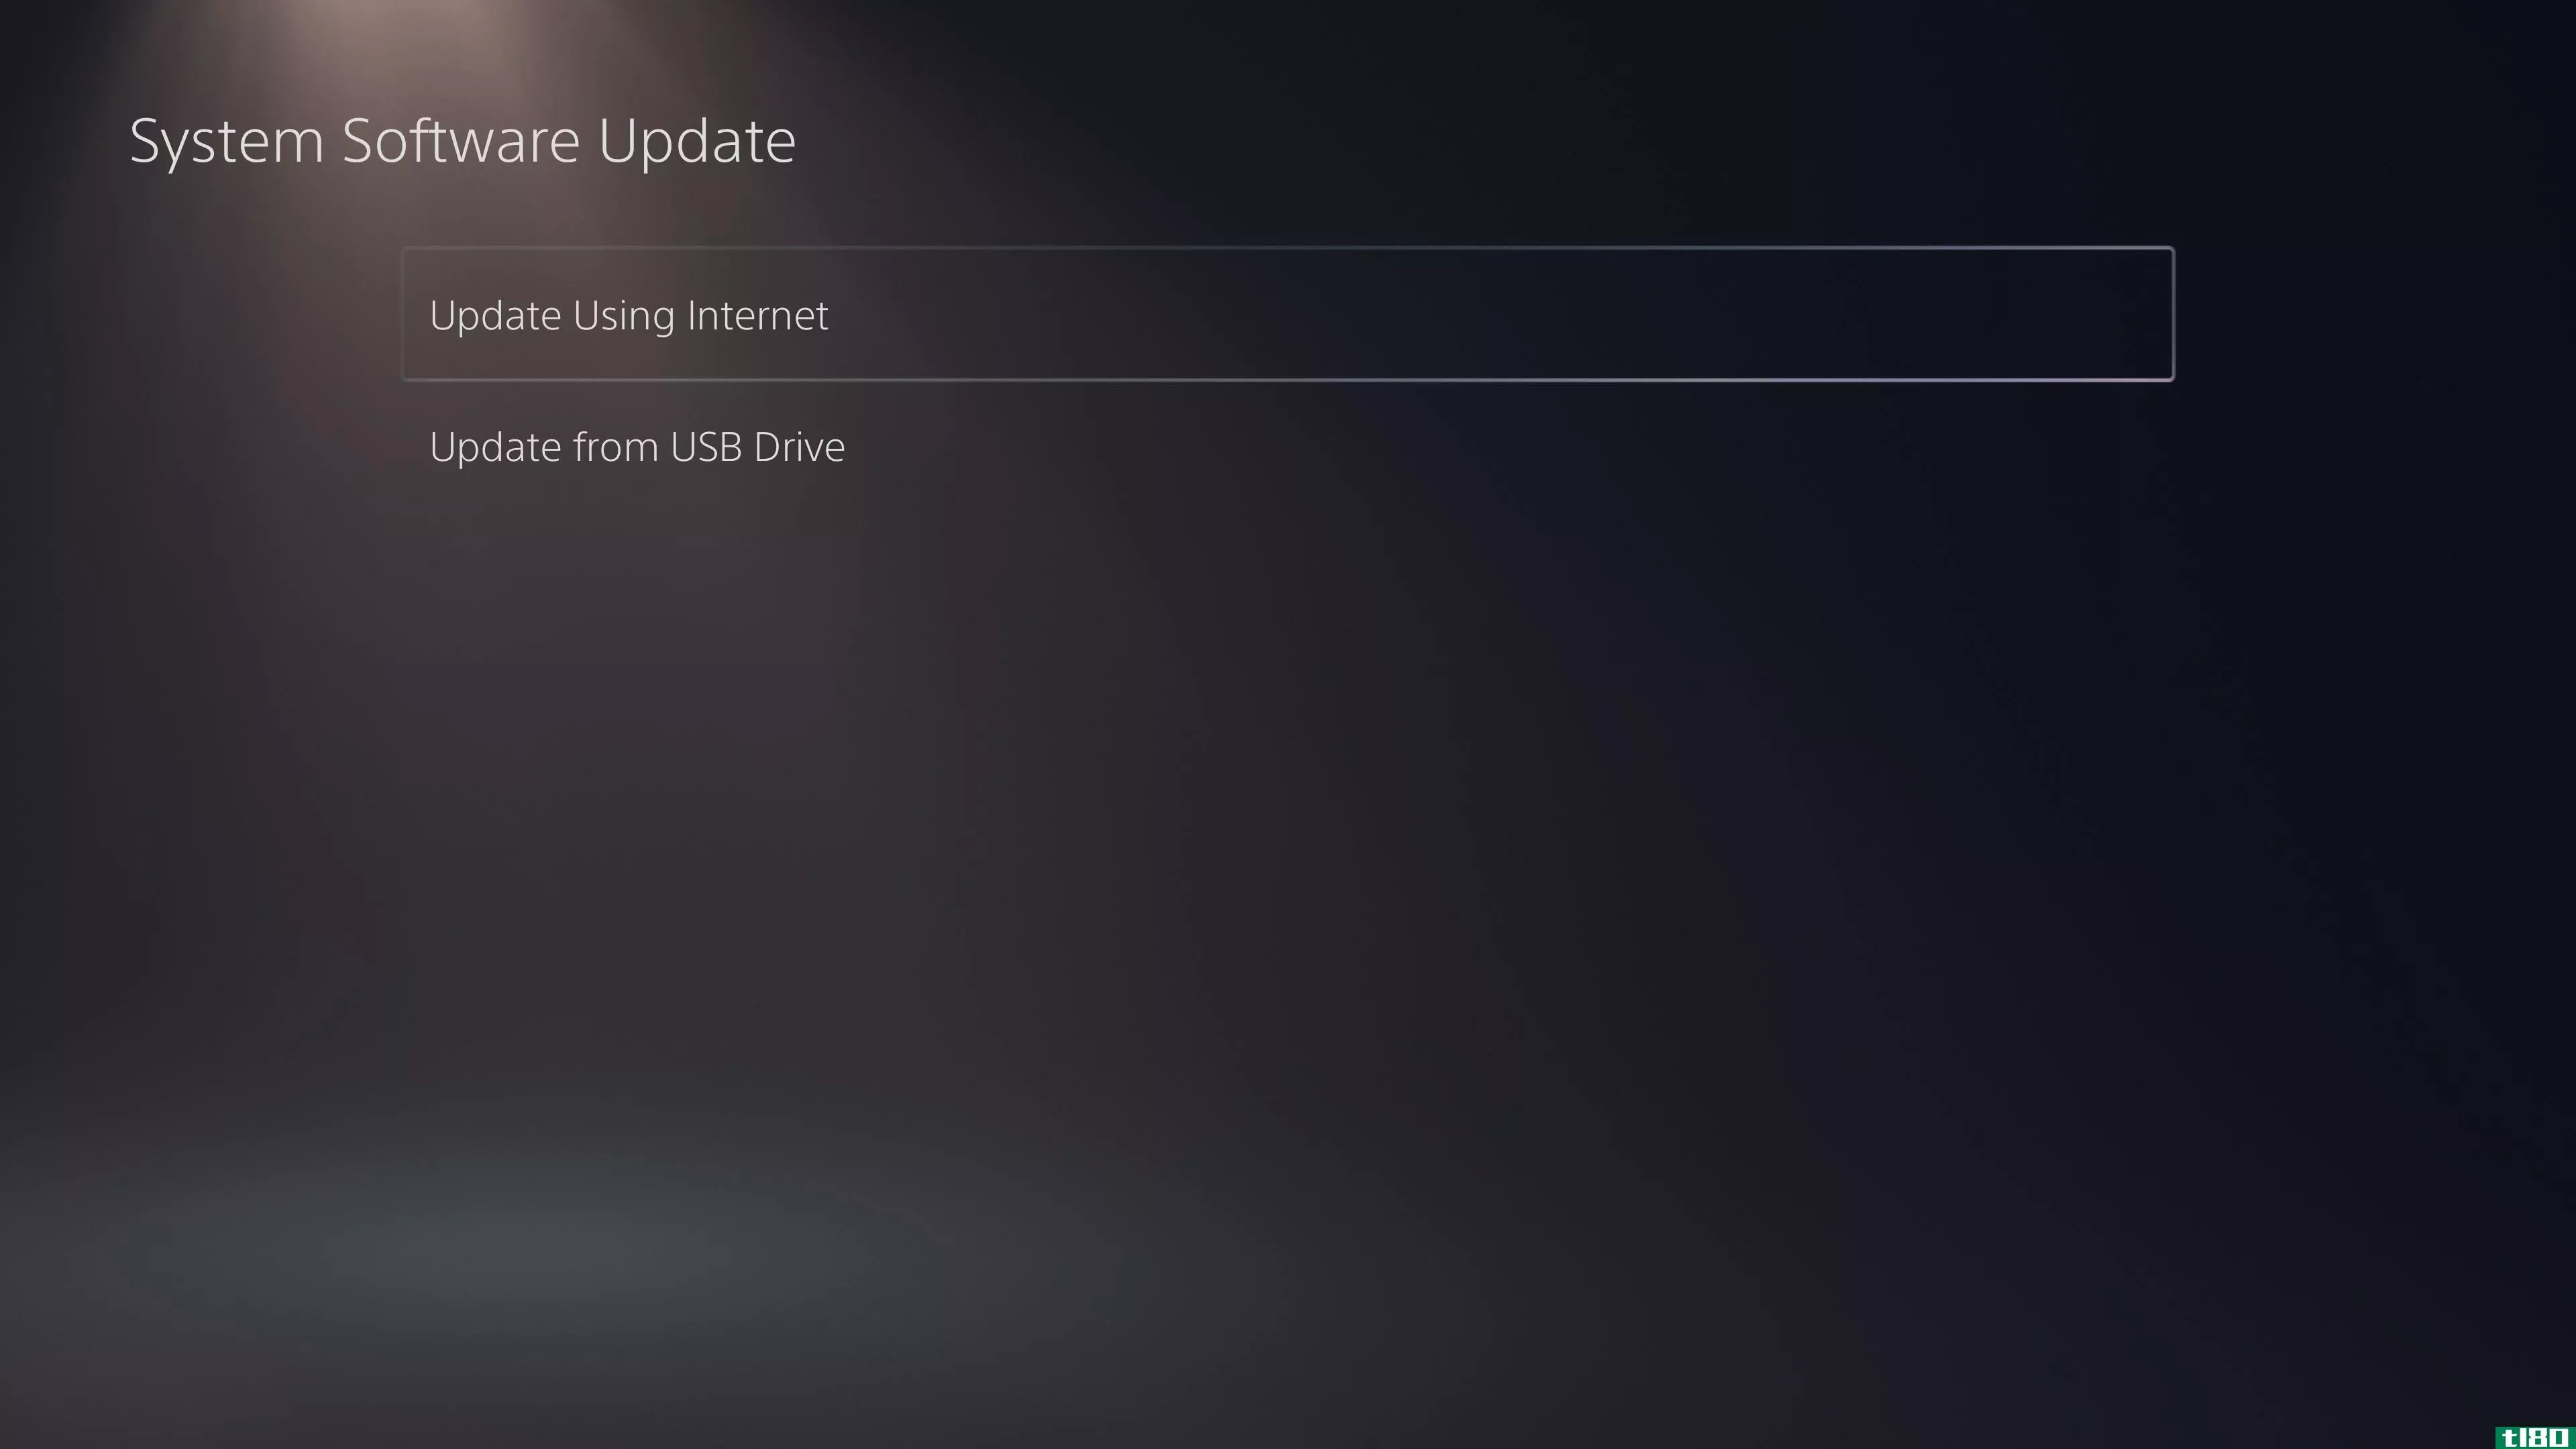 PS5 Update Using Internet